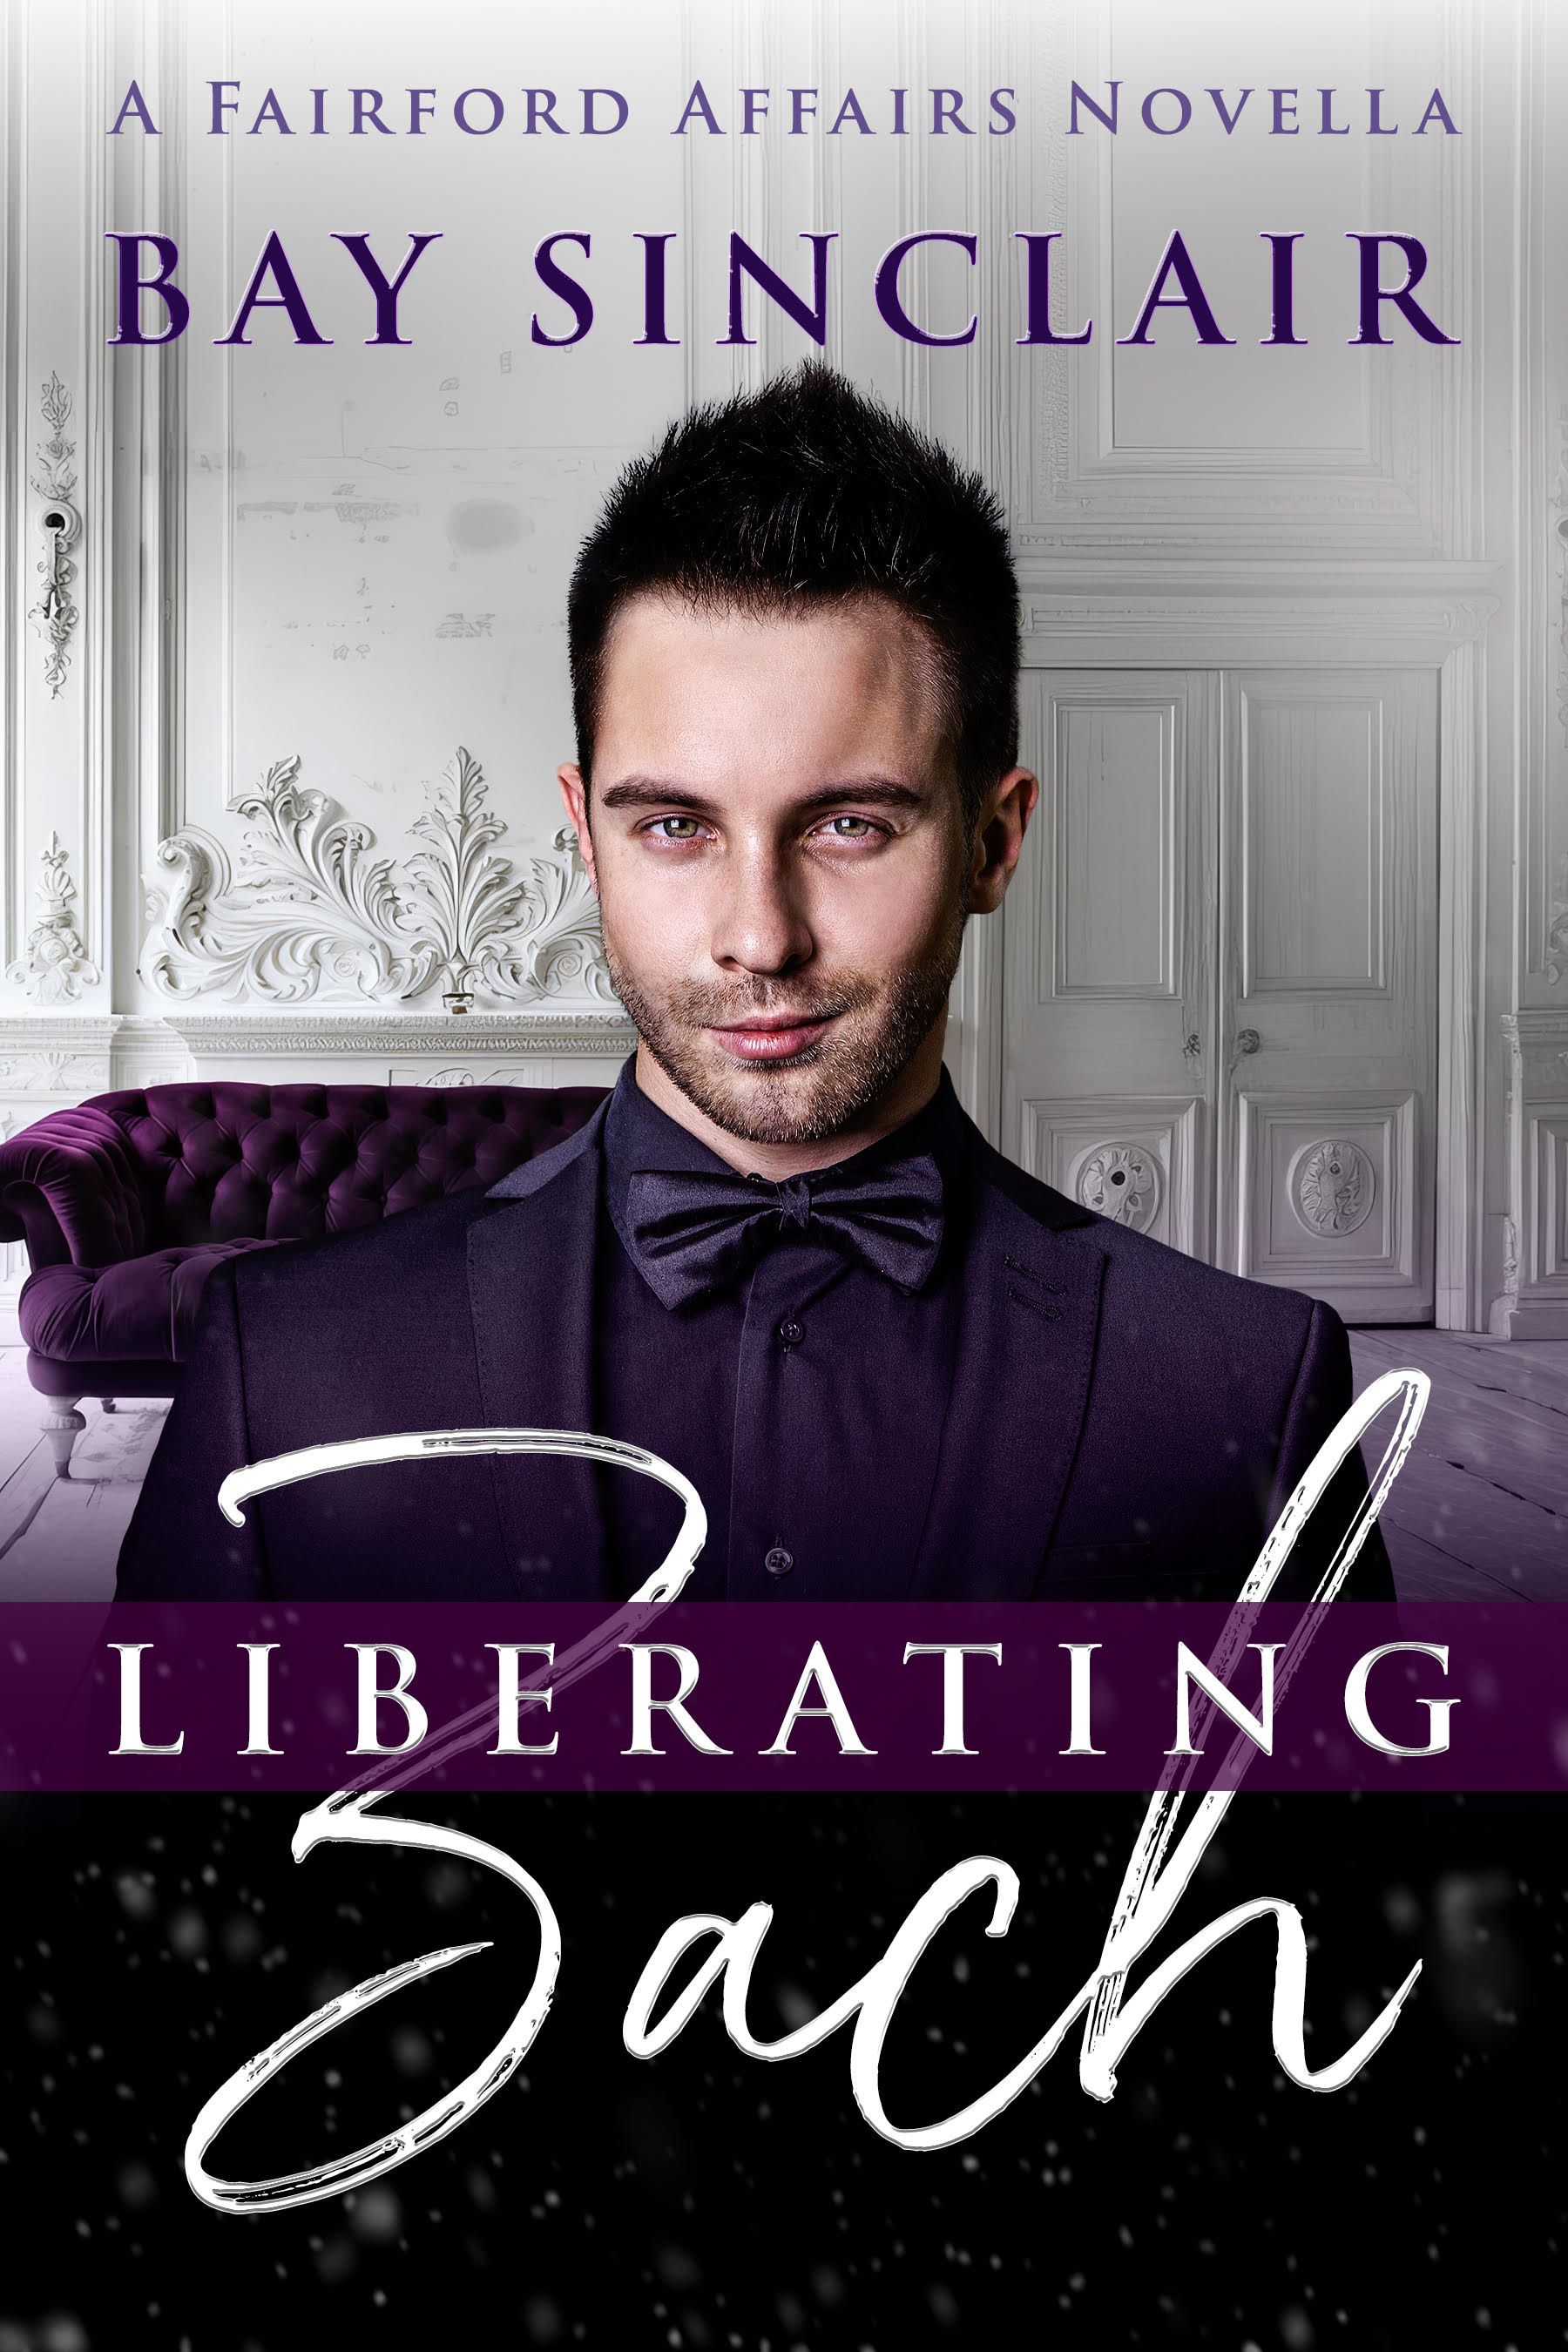 A man in a suit and bow tie is on the cover of a book called liberating zach.